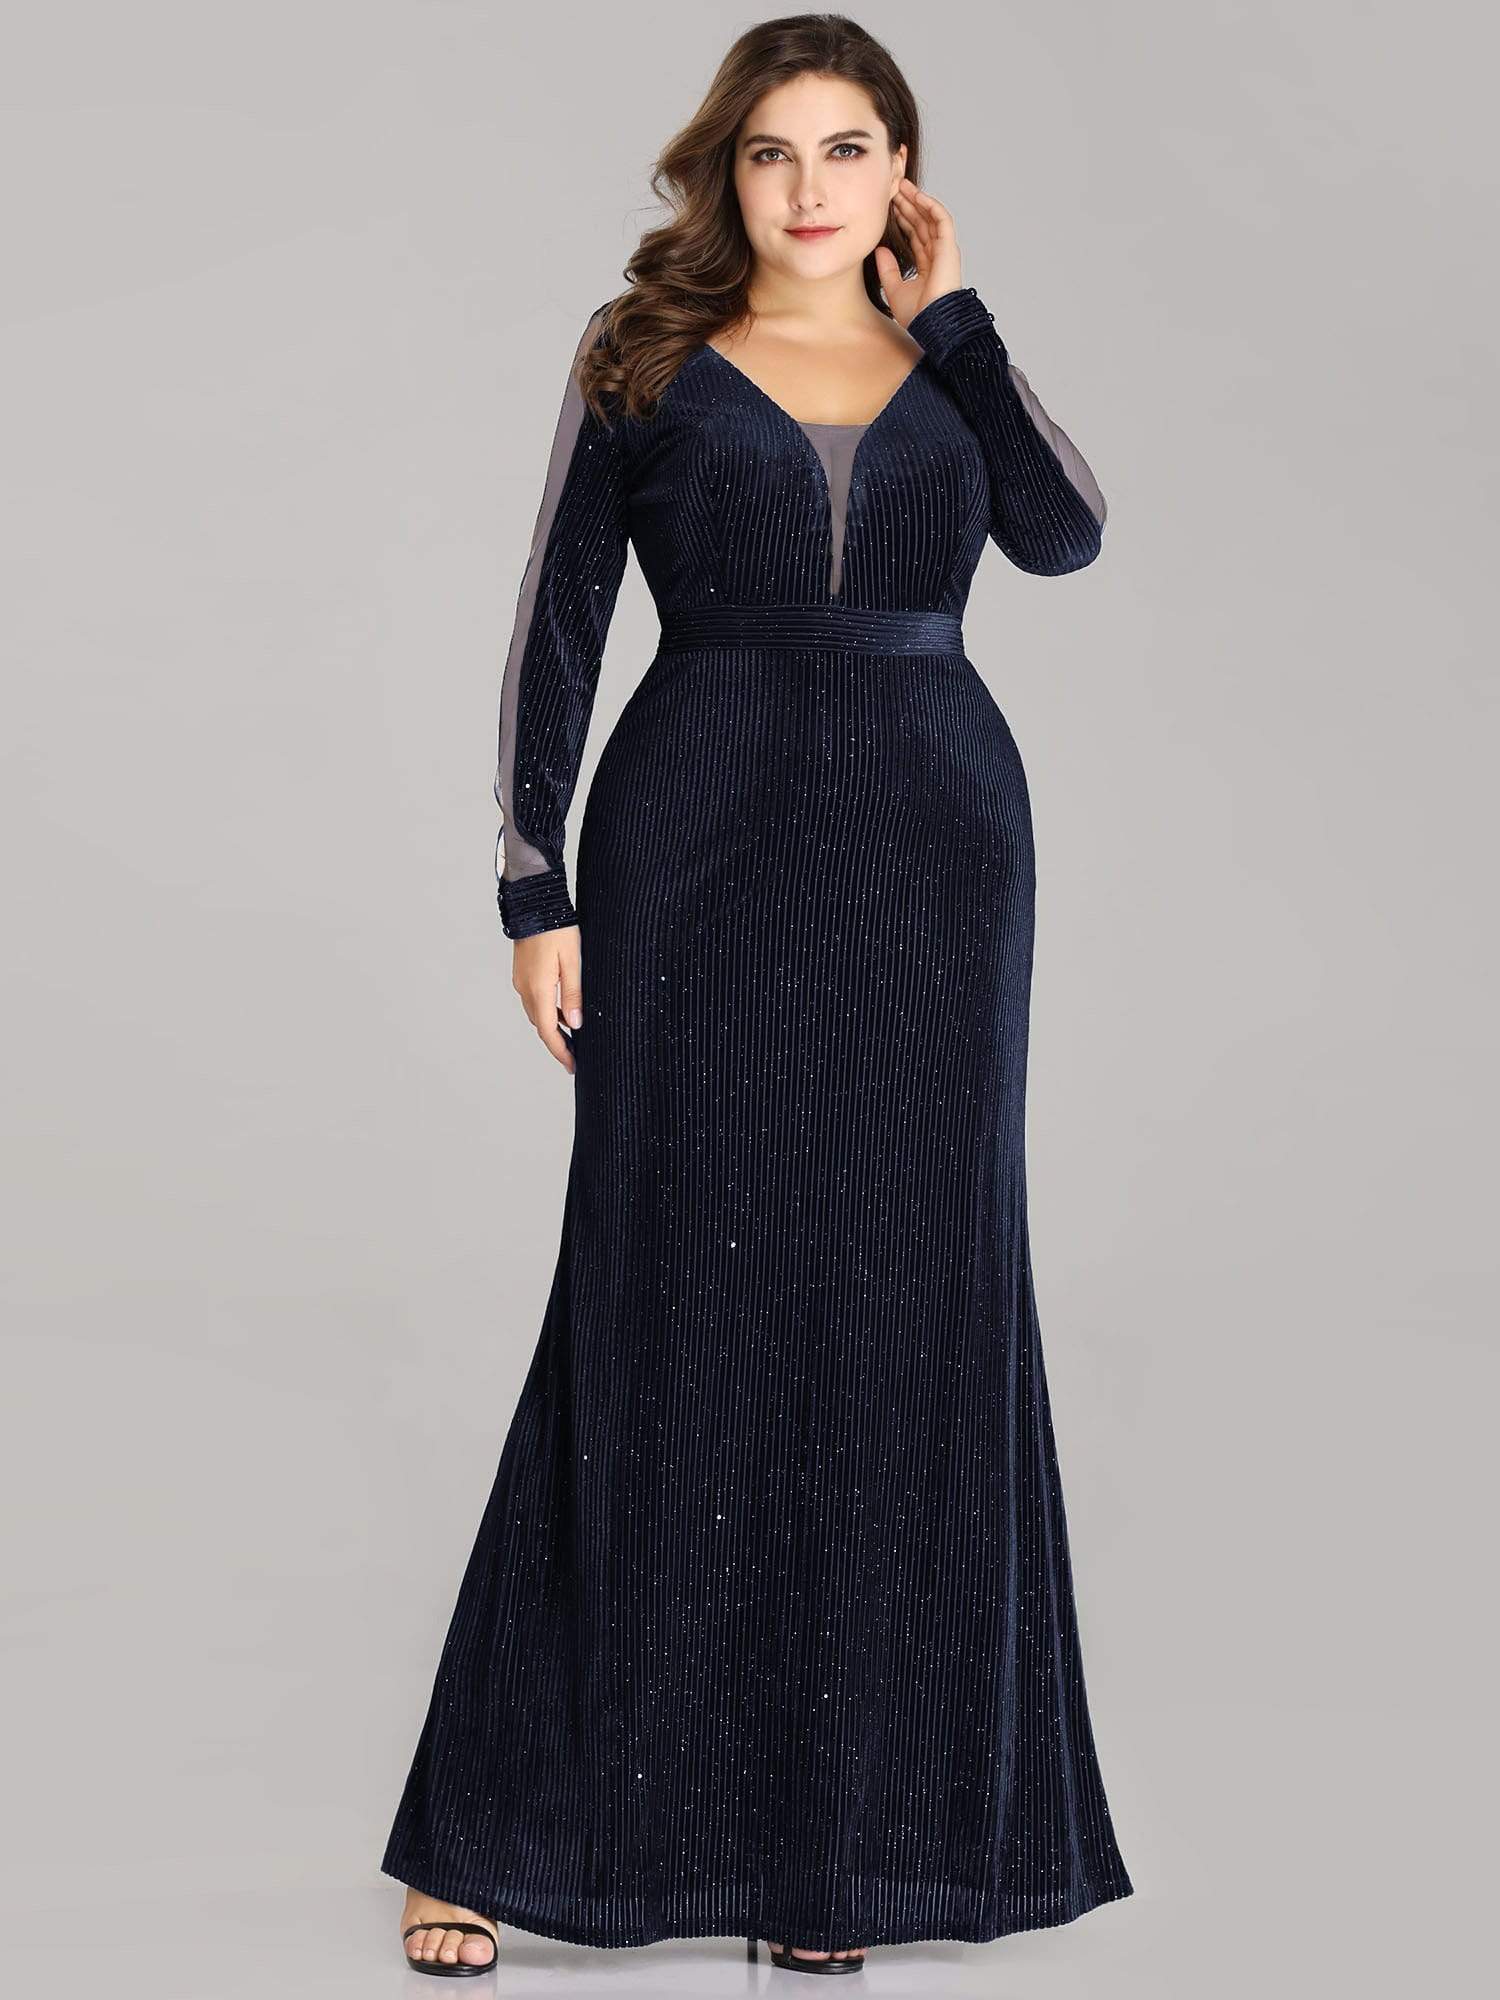 COLOR=Navy Blue | Elegant Long-Sleeve V Neck Glitter Formal Evening Dress-Navy Blue 1